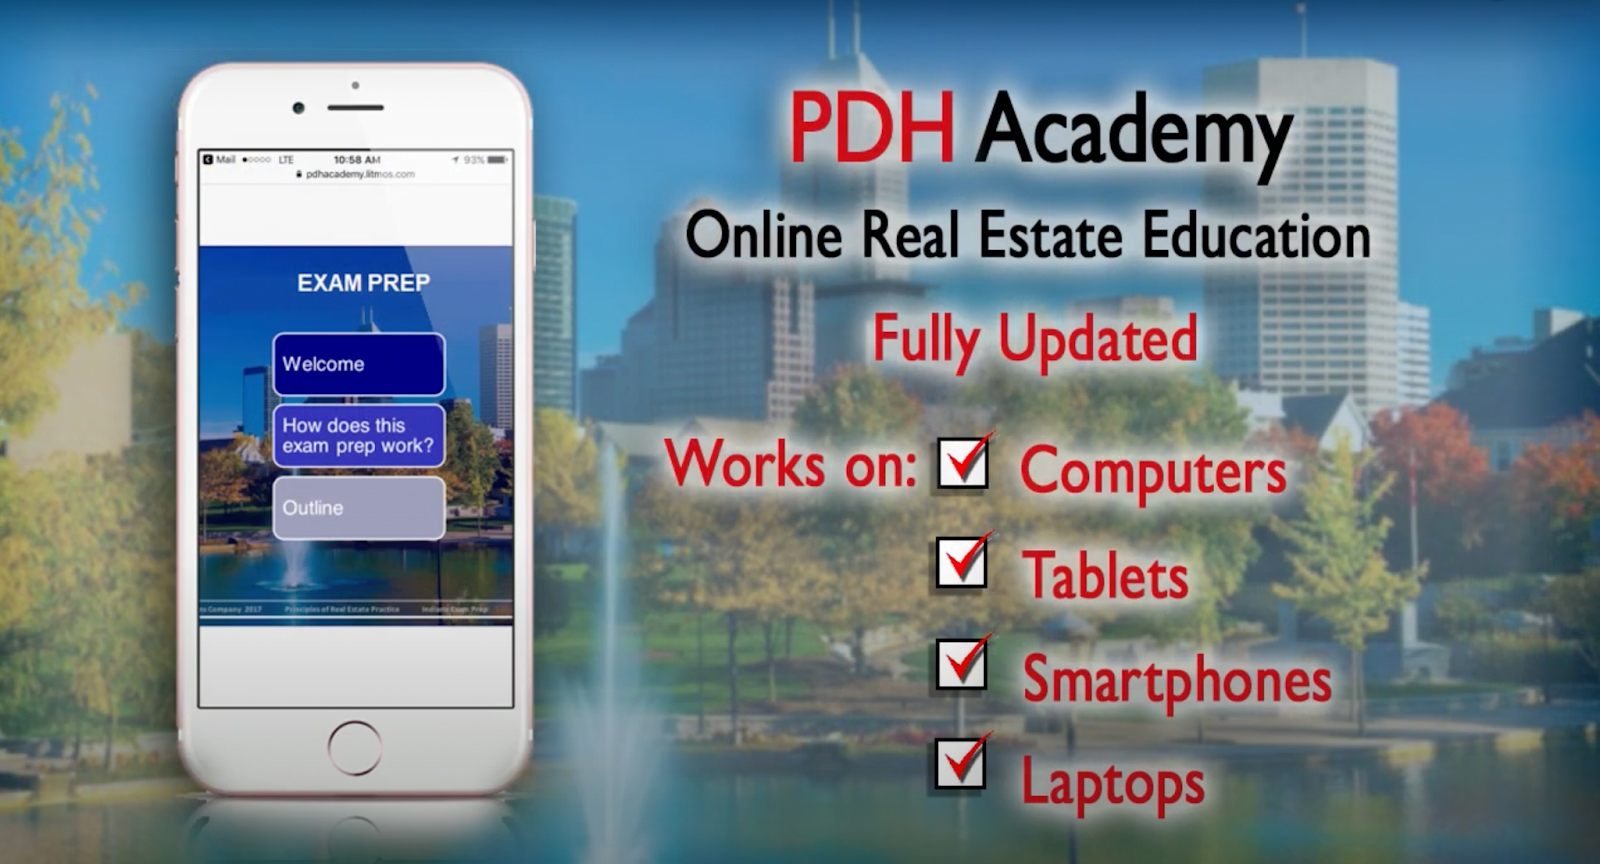 PDH Academy online real estate academy phone screenshot.